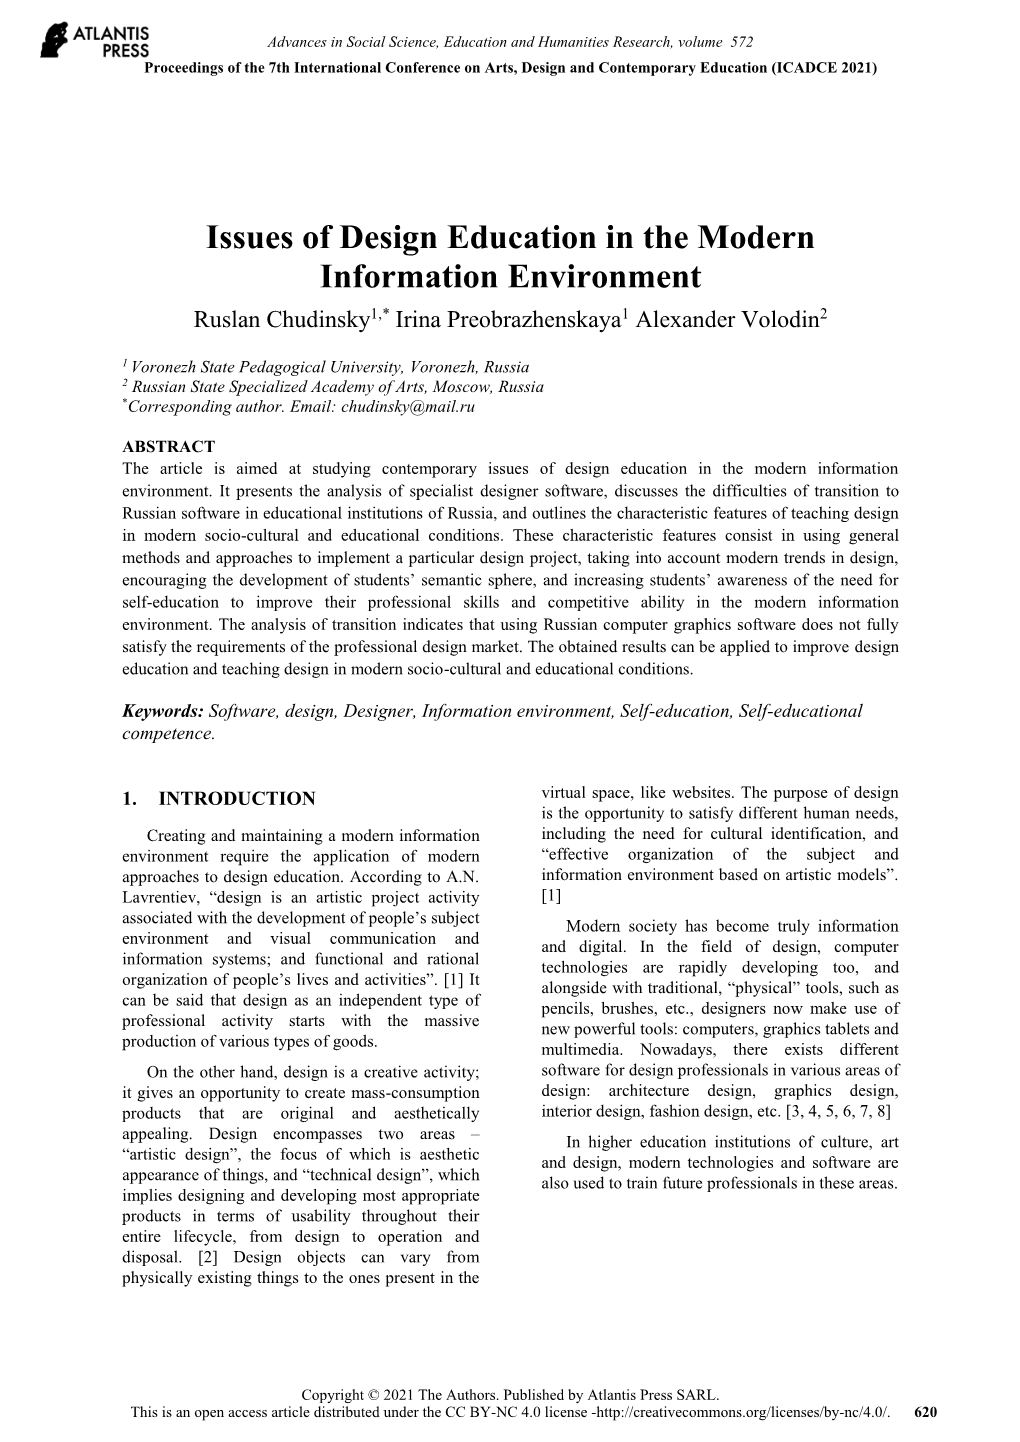 Issues of Design Education in the Modern Information Environment Ruslan Chudinsky1,* Irina Preobrazhenskaya1 Alexander Volodin2